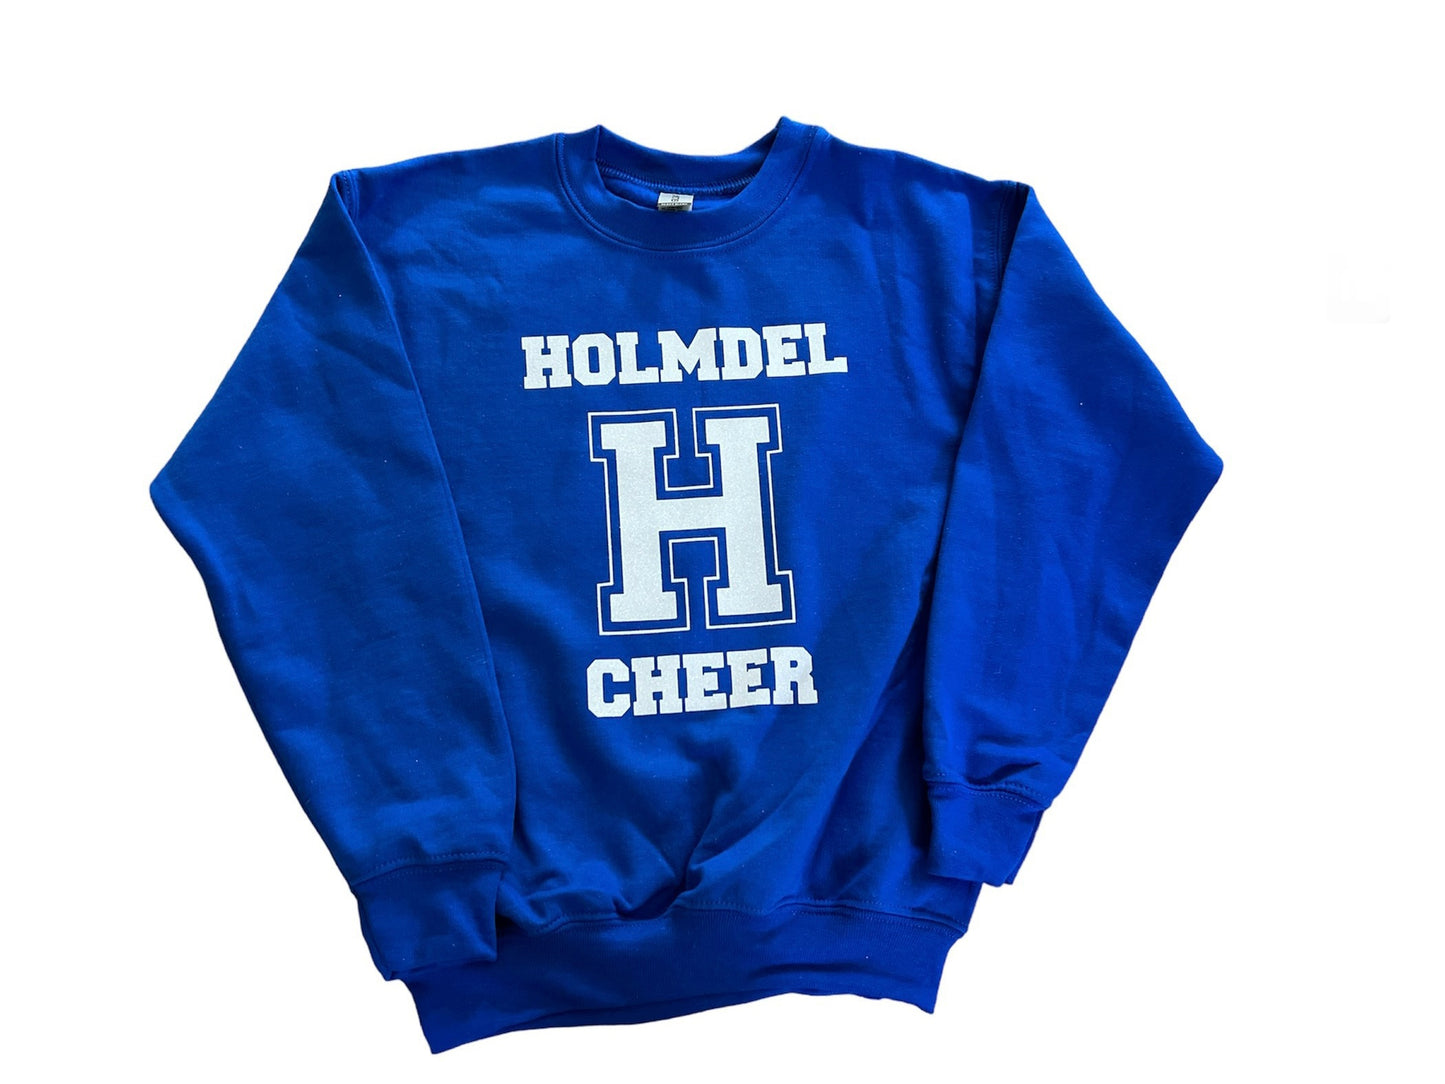 Holmdel Cheer Sweatshirt